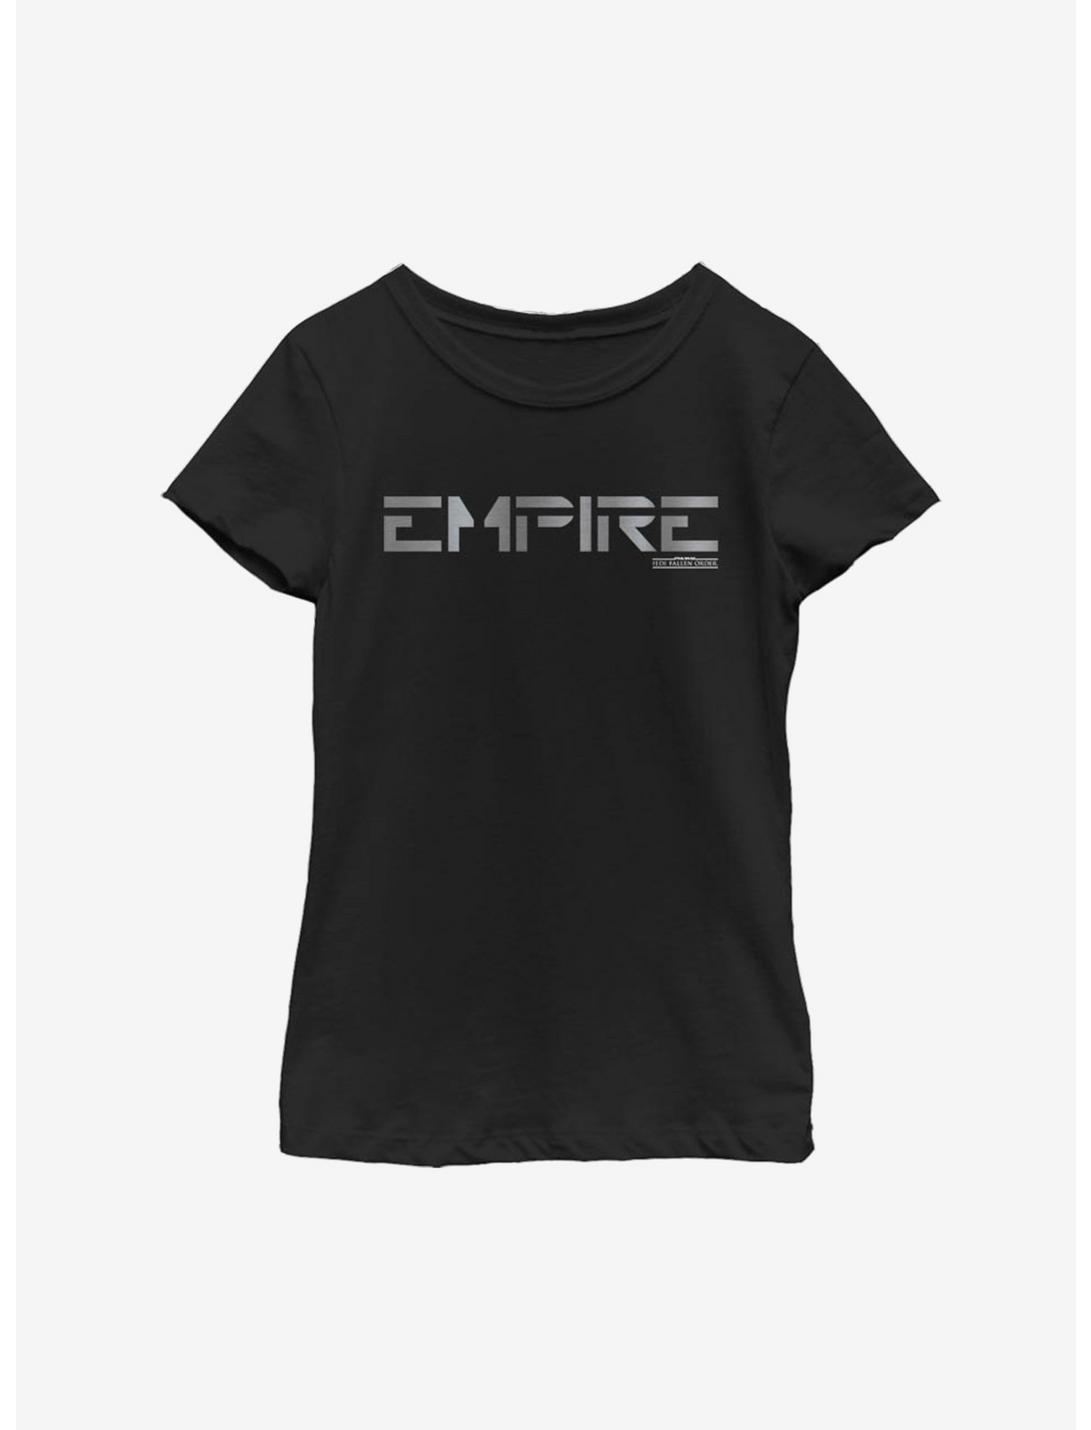 Star Wars Jedi Fallen Order Empire Script Youth Girls T-Shirt, BLACK, hi-res